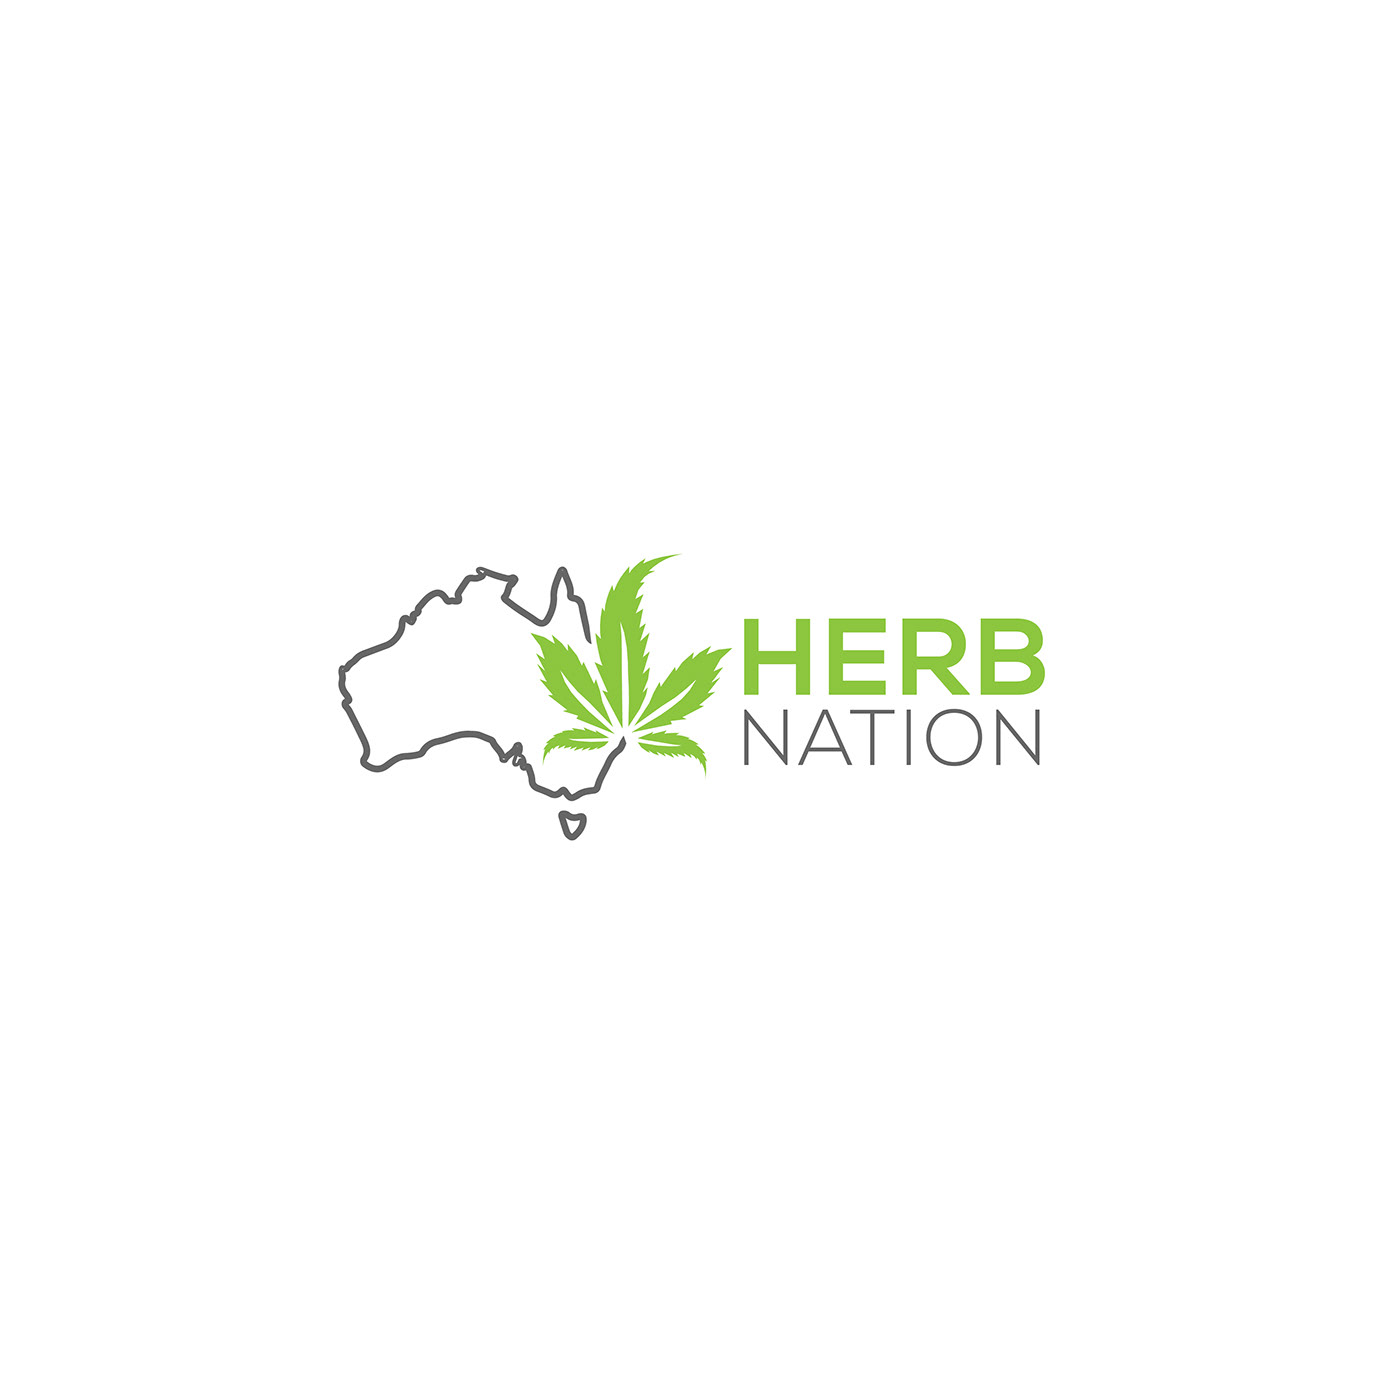 Australia cannabis CBD Herb logo marijuana weed